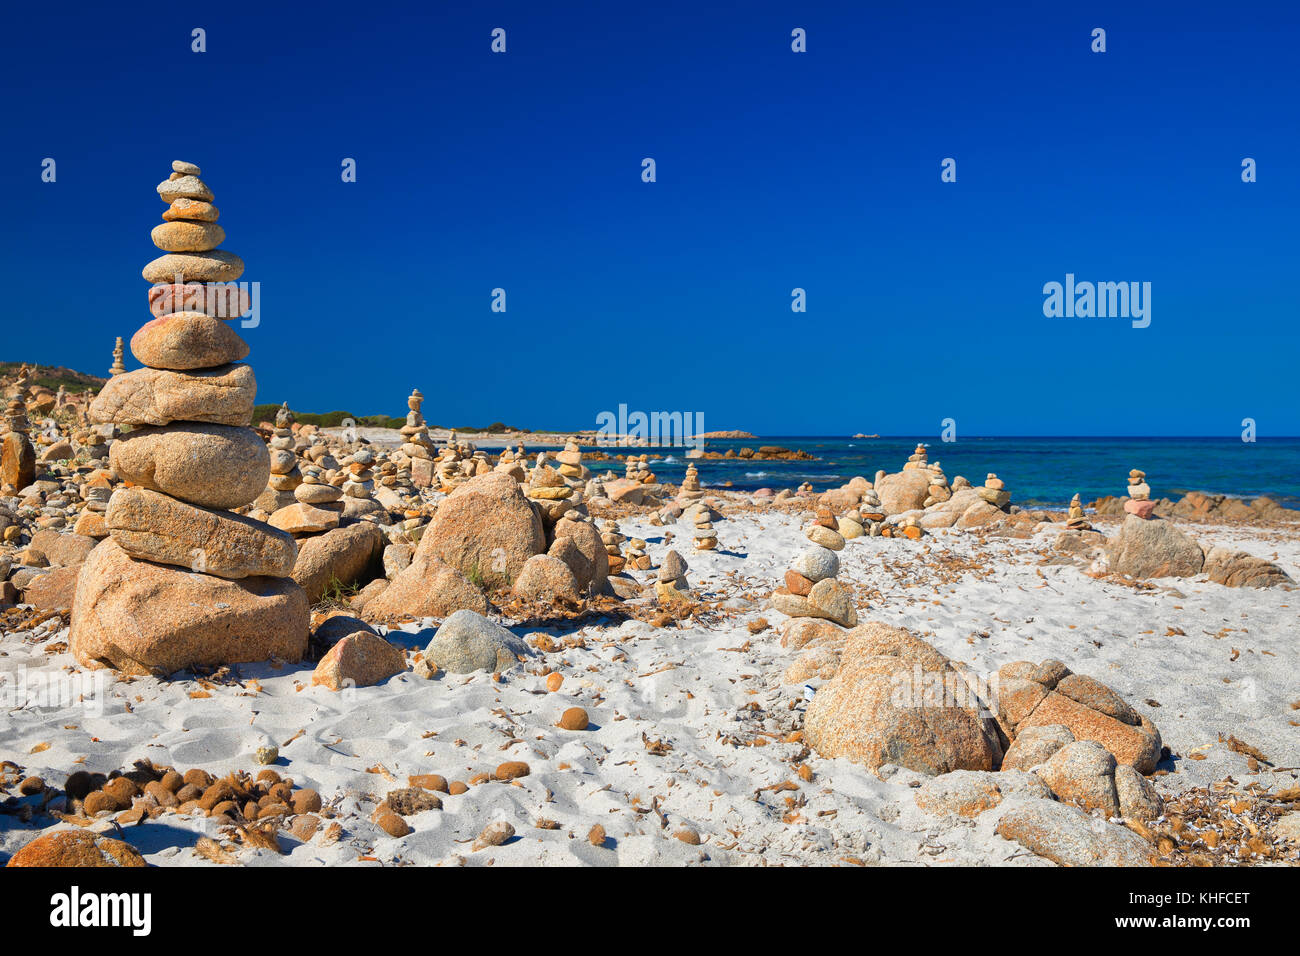 Balance stones on the beach Stock Photo